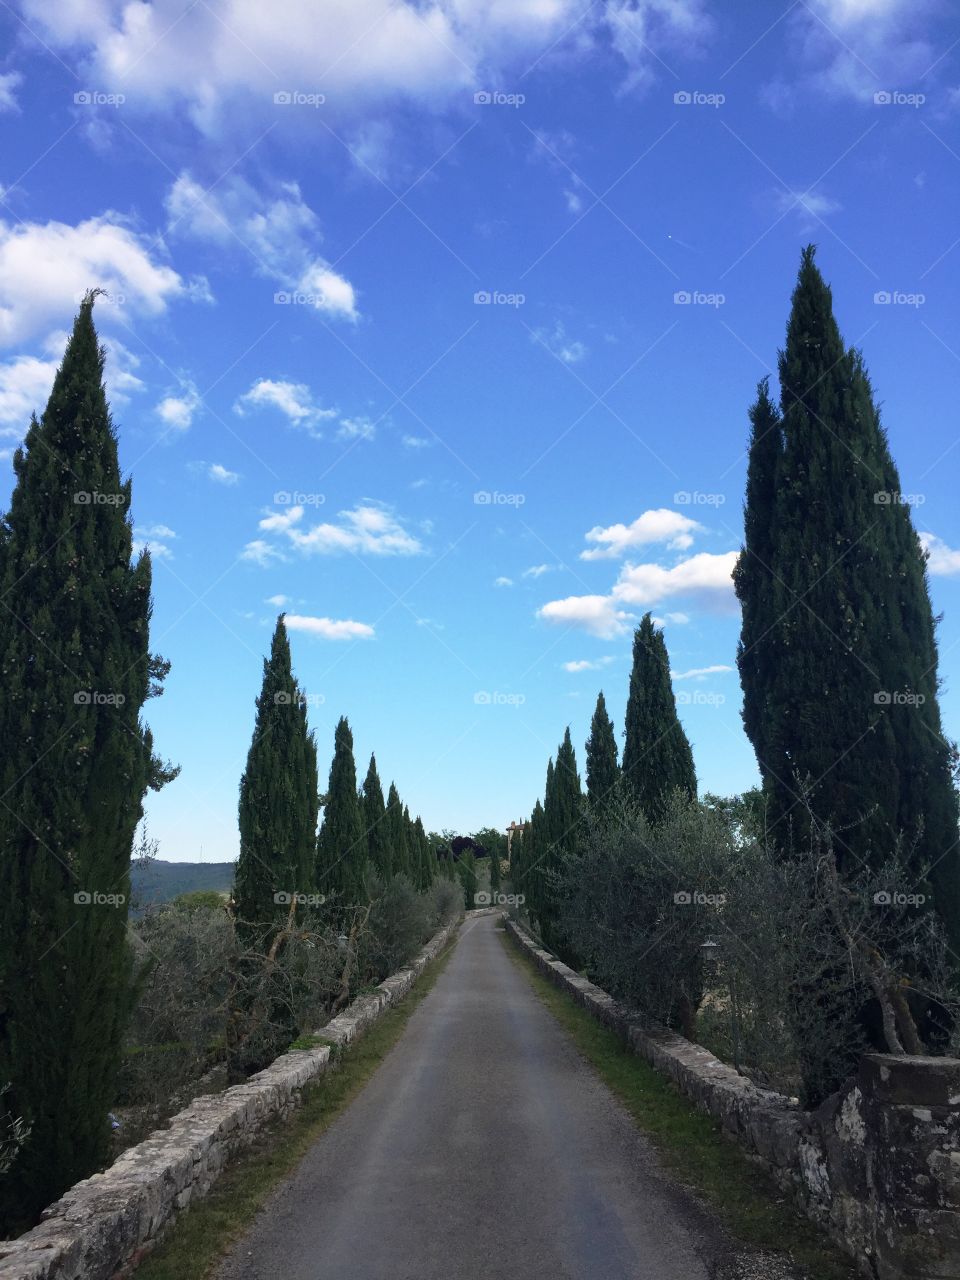 Walking in the street - Tuscany - Italy